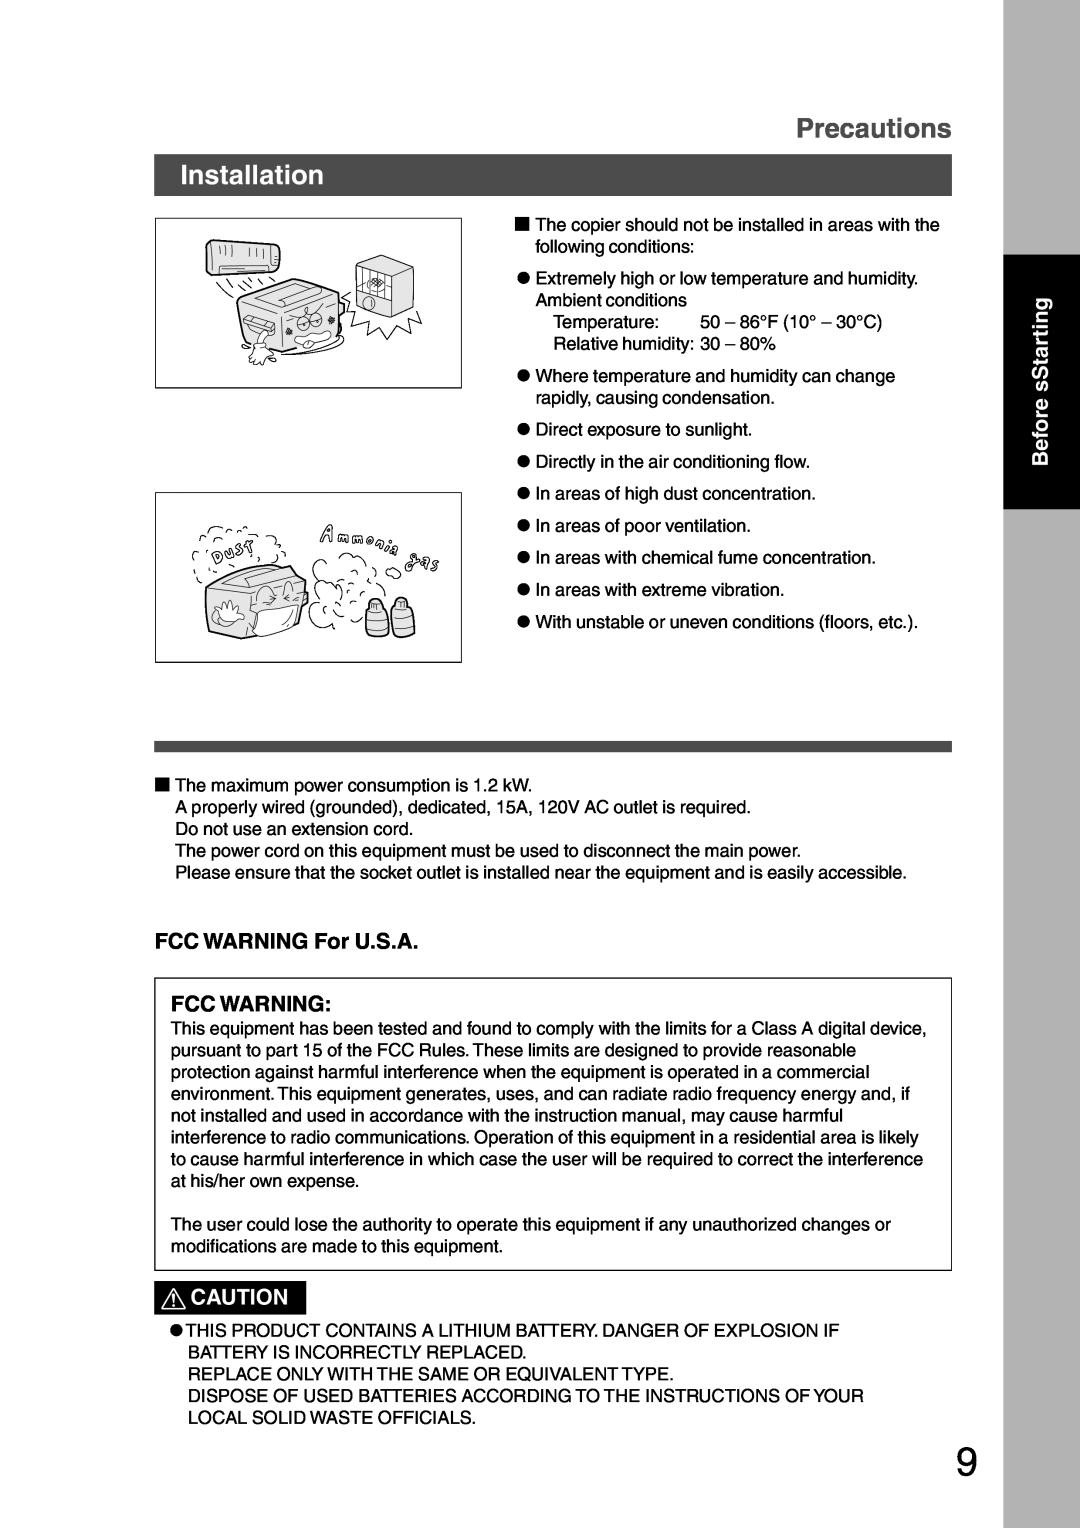 Panasonic DP-1810F manual Installation, FCC WARNING For U.S.A FCC WARNING, Before sStarting, Precautions 